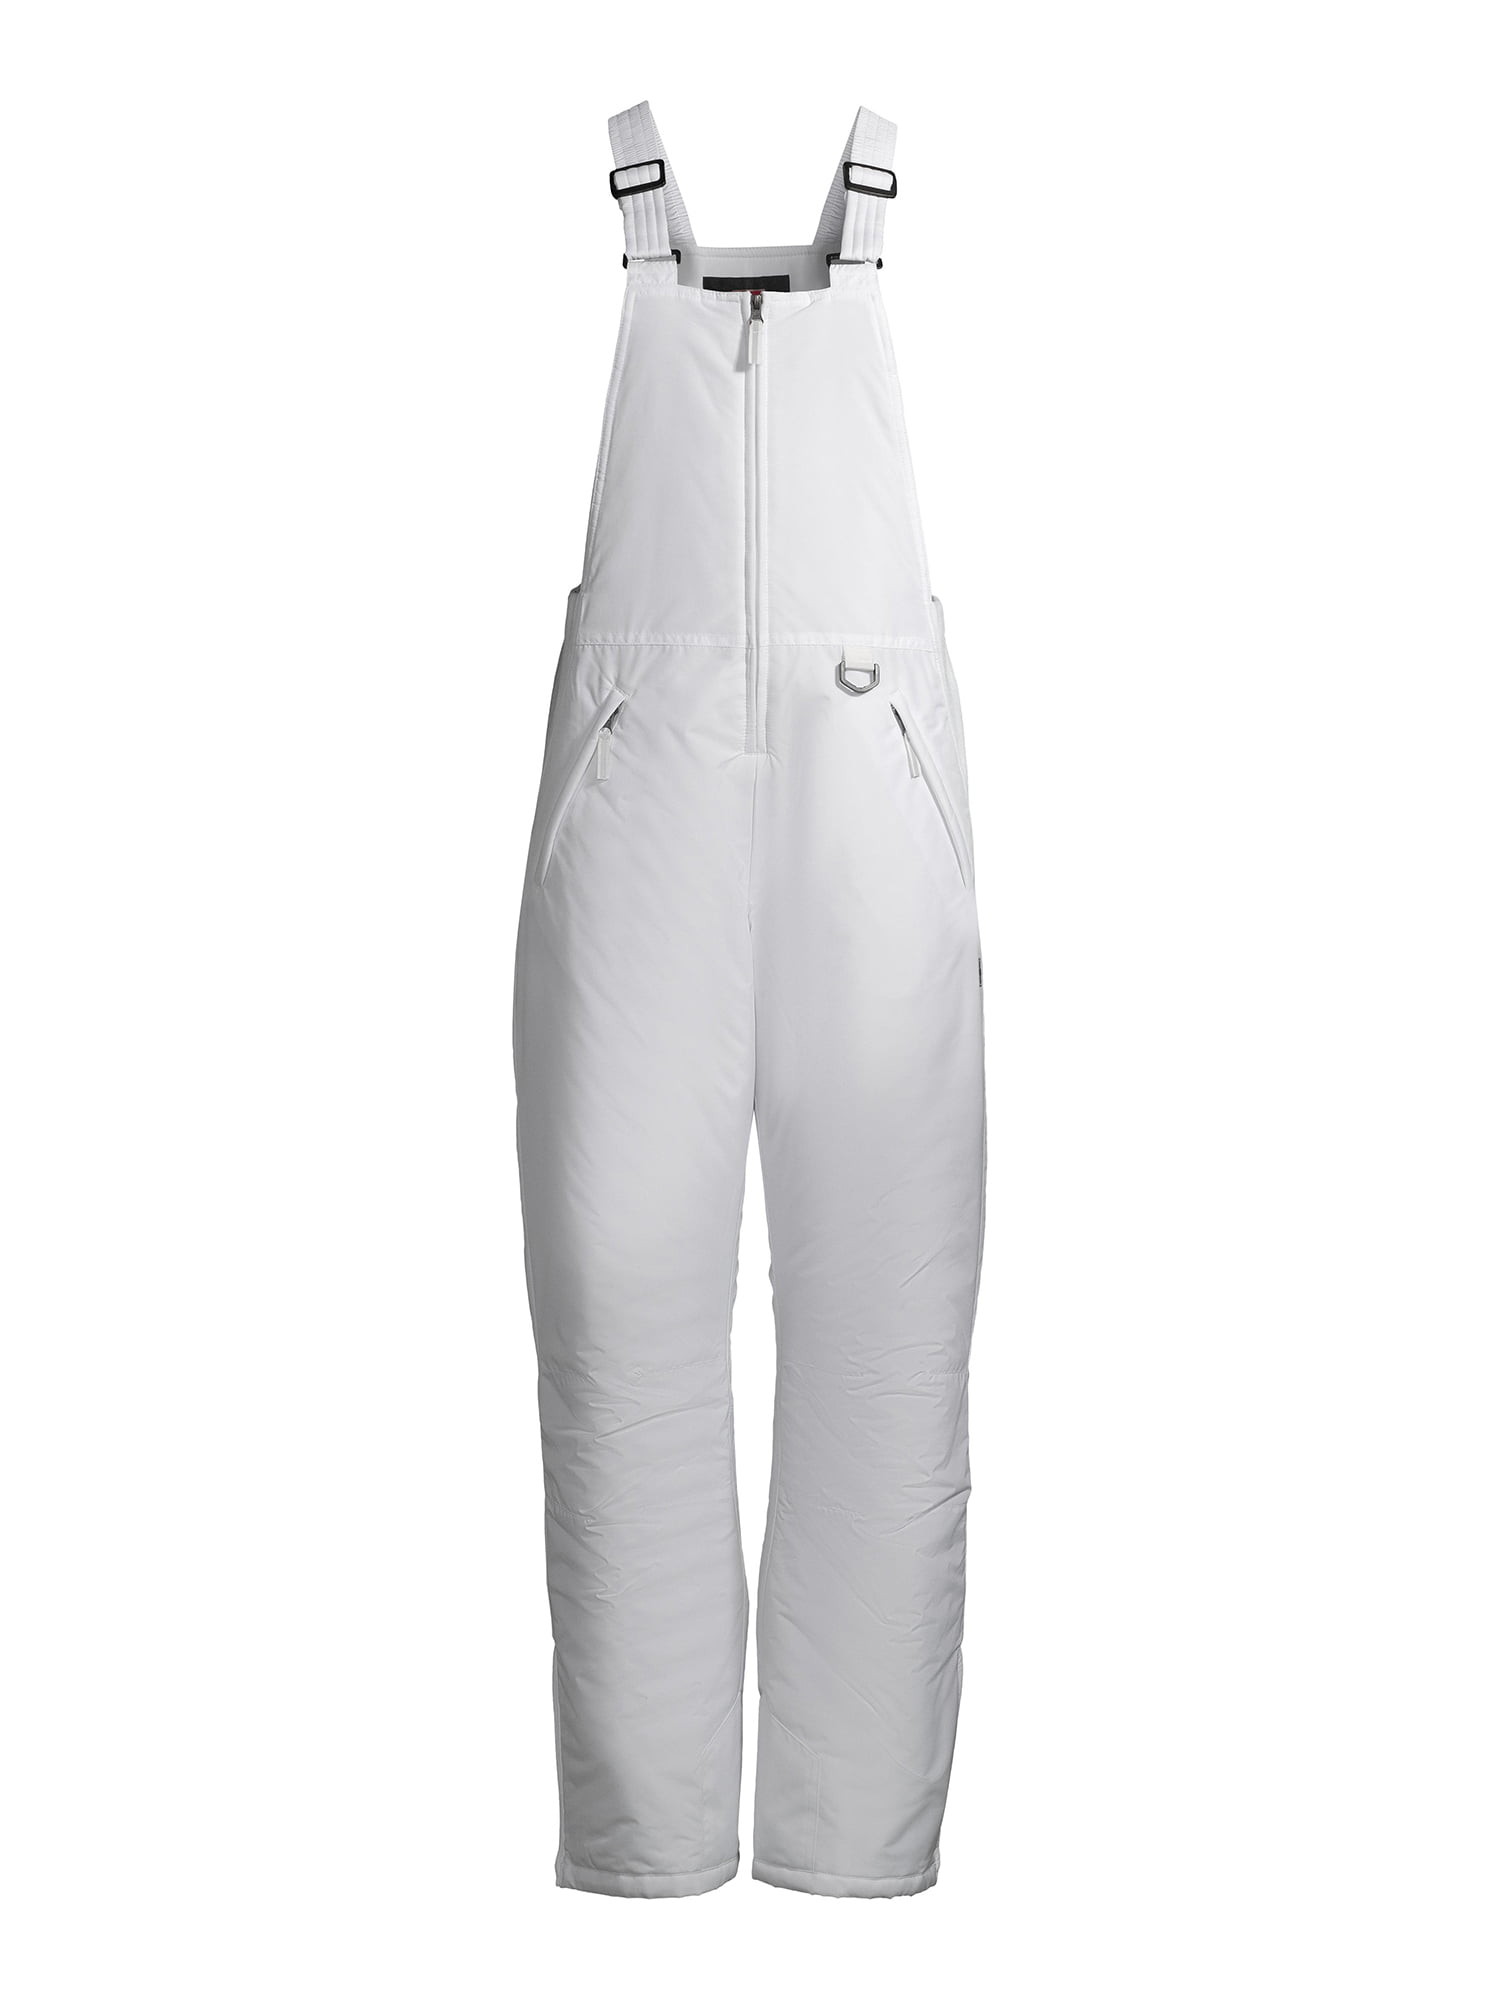 Pantalones impermeables Millet Snowbasin (Blanco) mujer - Alpinstore